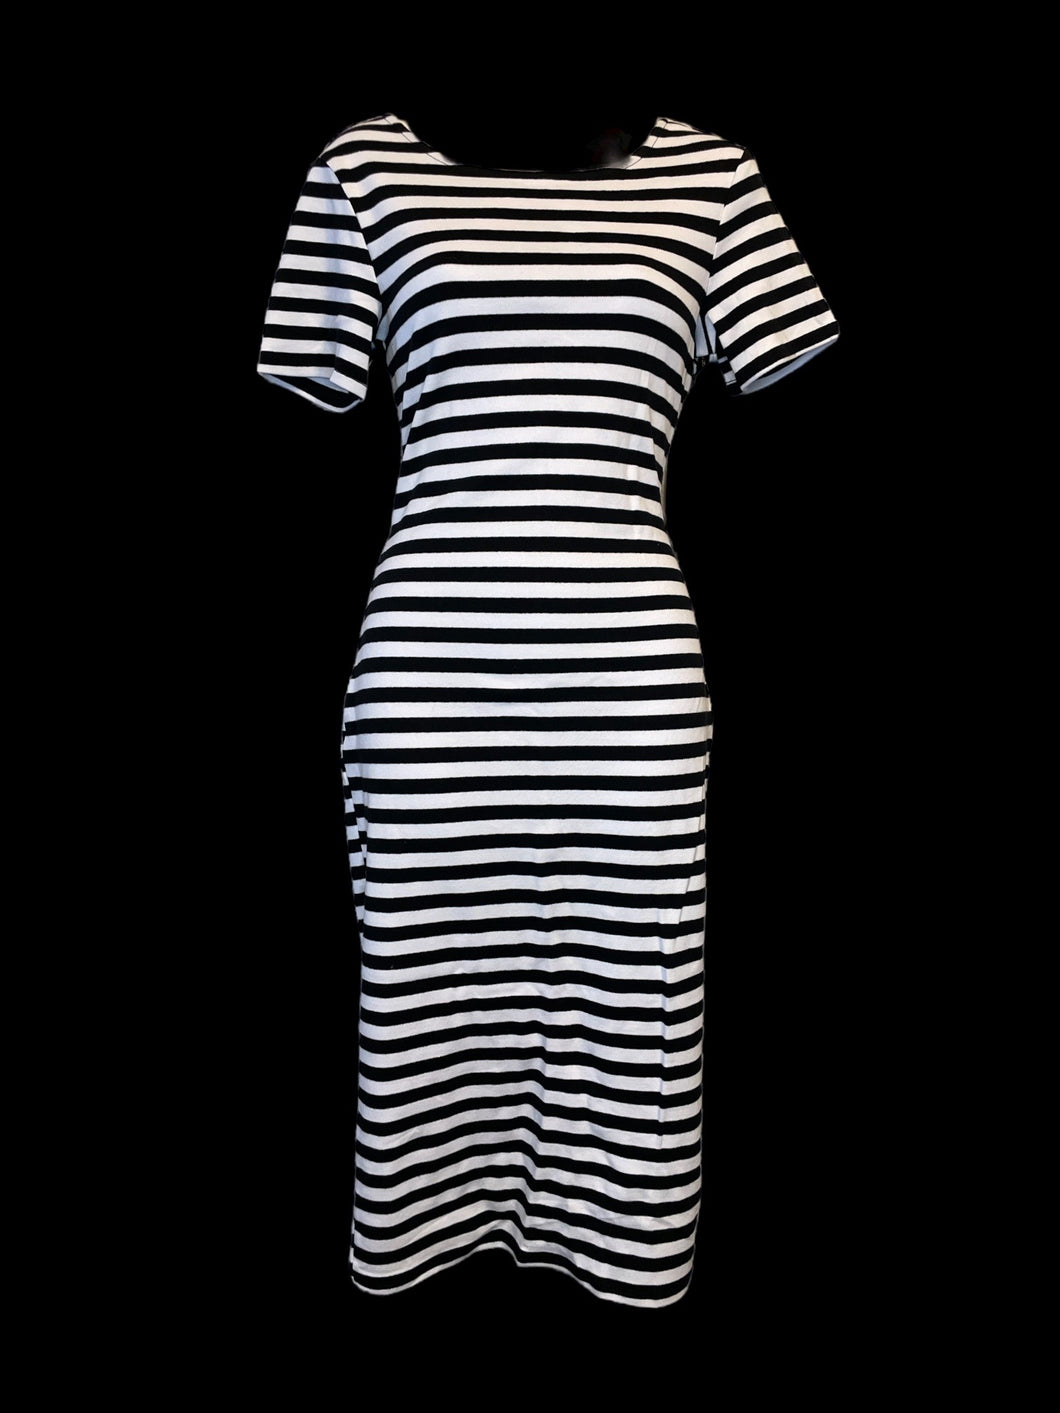 L NWT Black & white stripe short sleeve bodycon dress w/ back zipper closure